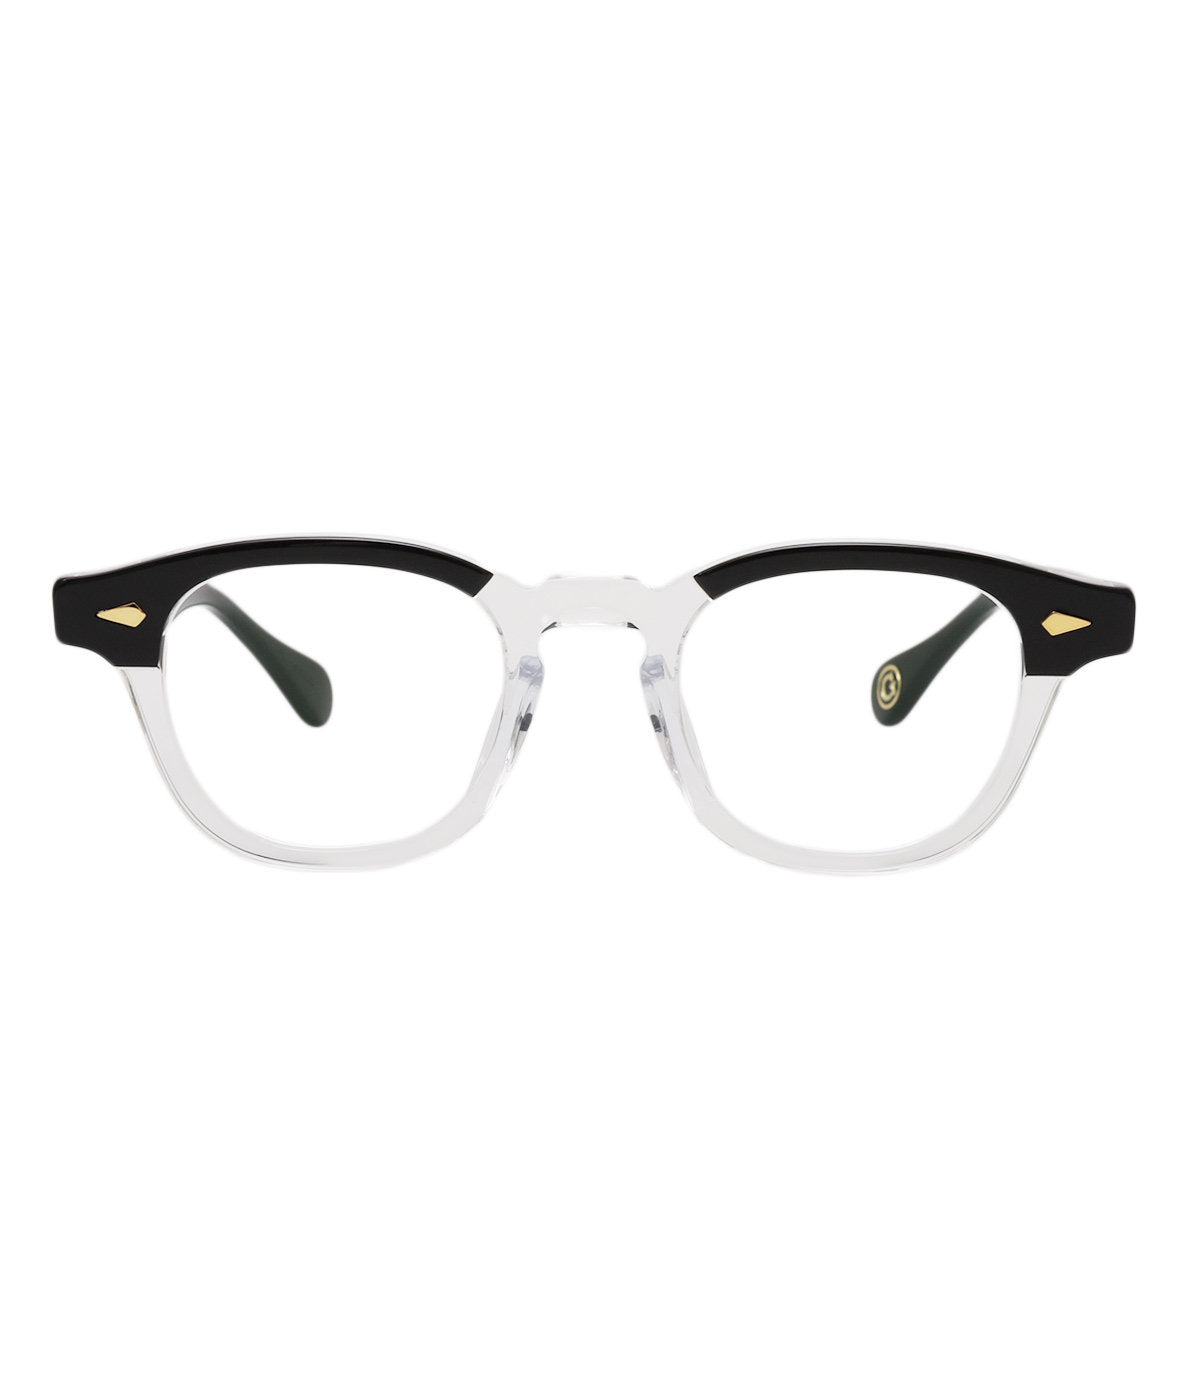 JULIUS TART OPTICAL AR Gold Edition Eyeglass Frame Black Clear